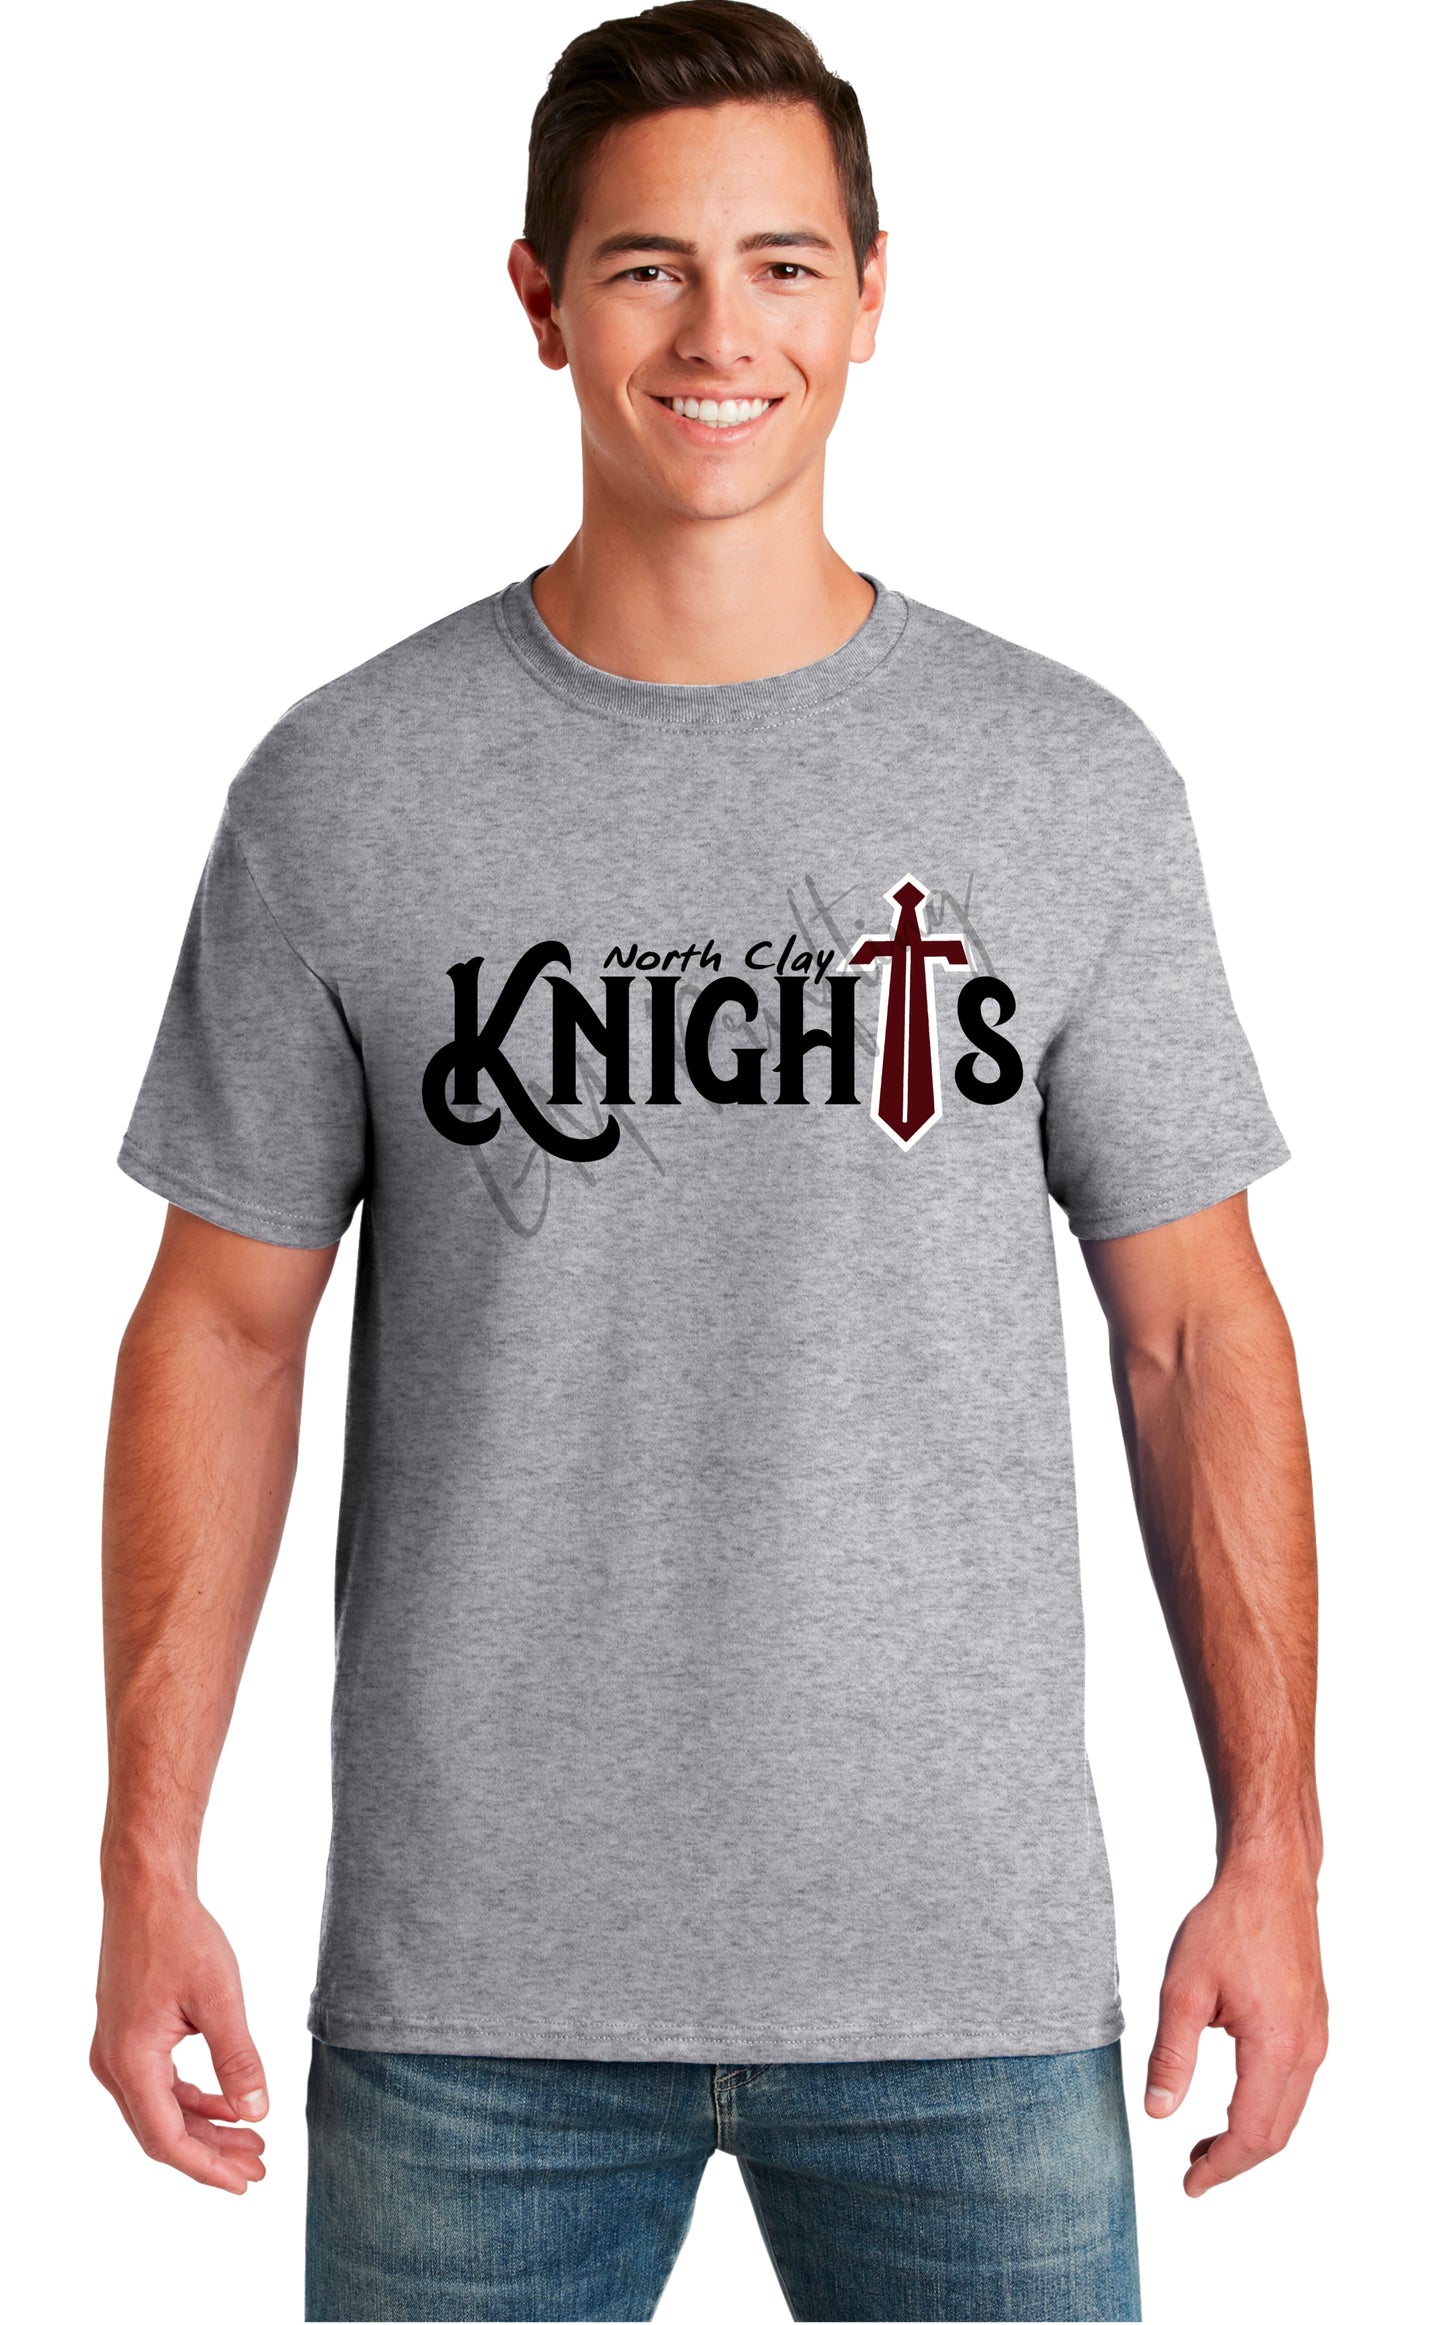 Knights #4